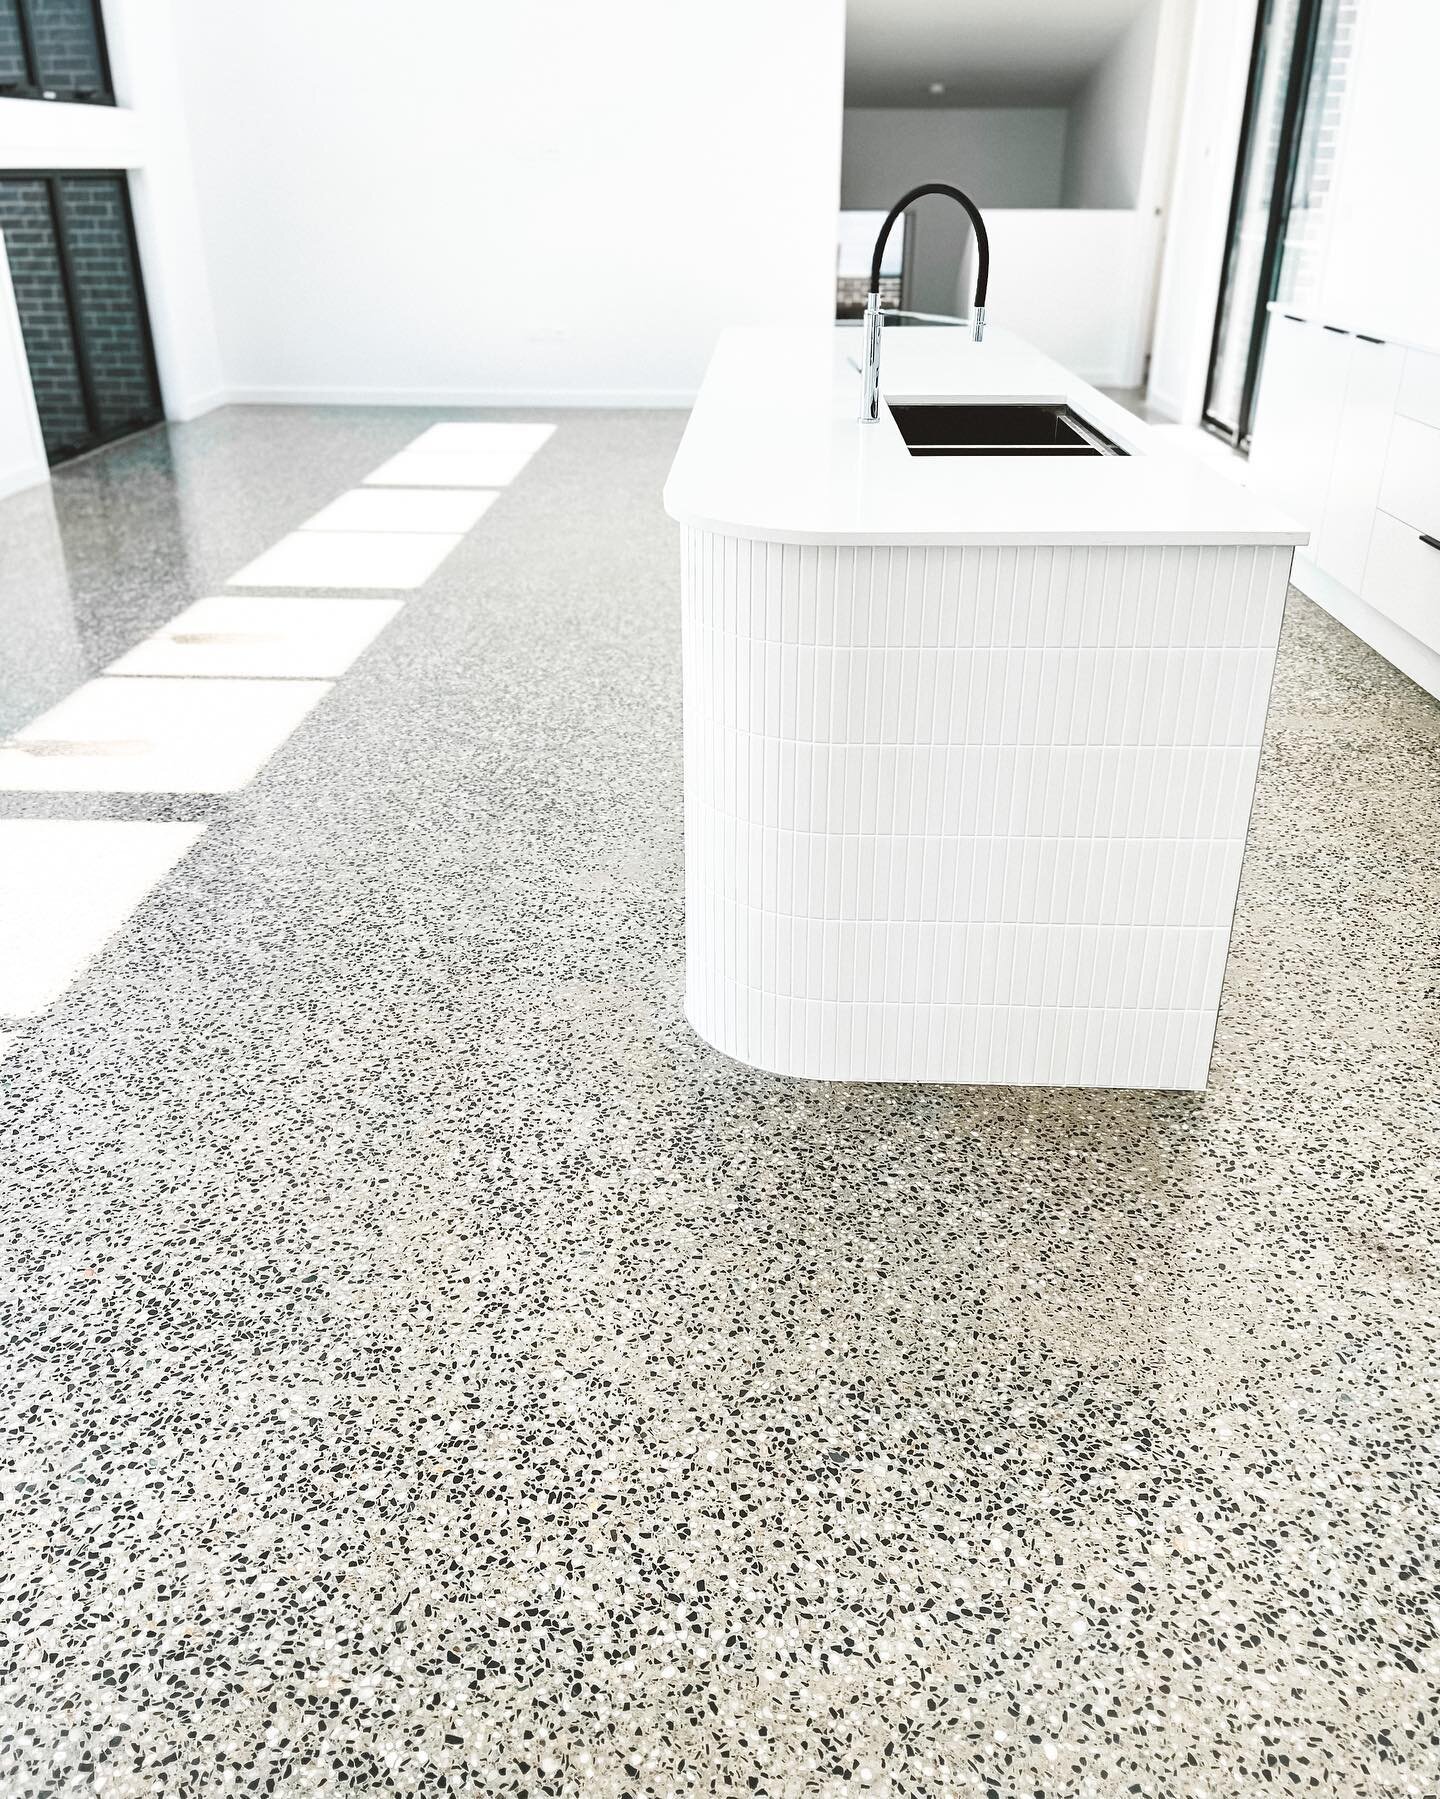 Bright and white 🤌🏽

#homeinspo #polishedconcrete #homedecor #flooring